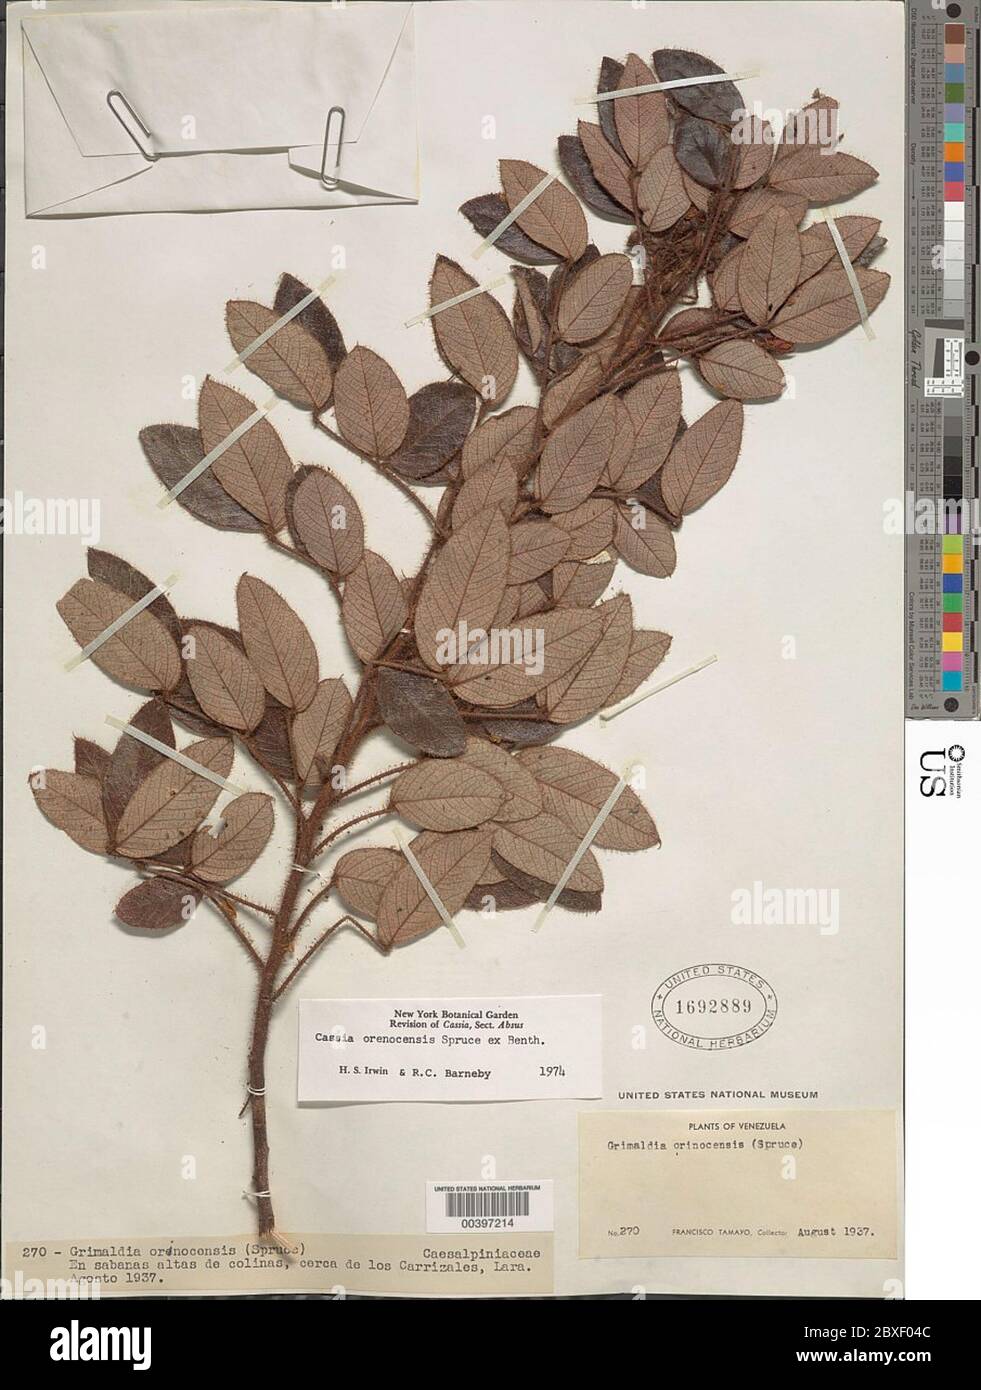 Chamaecrista orenocensis Spruce ex Benth HS Irwin Barneby Chamaecrista orenocensis Spruce ex Benth HS Irwin Barneby. Stock Photo